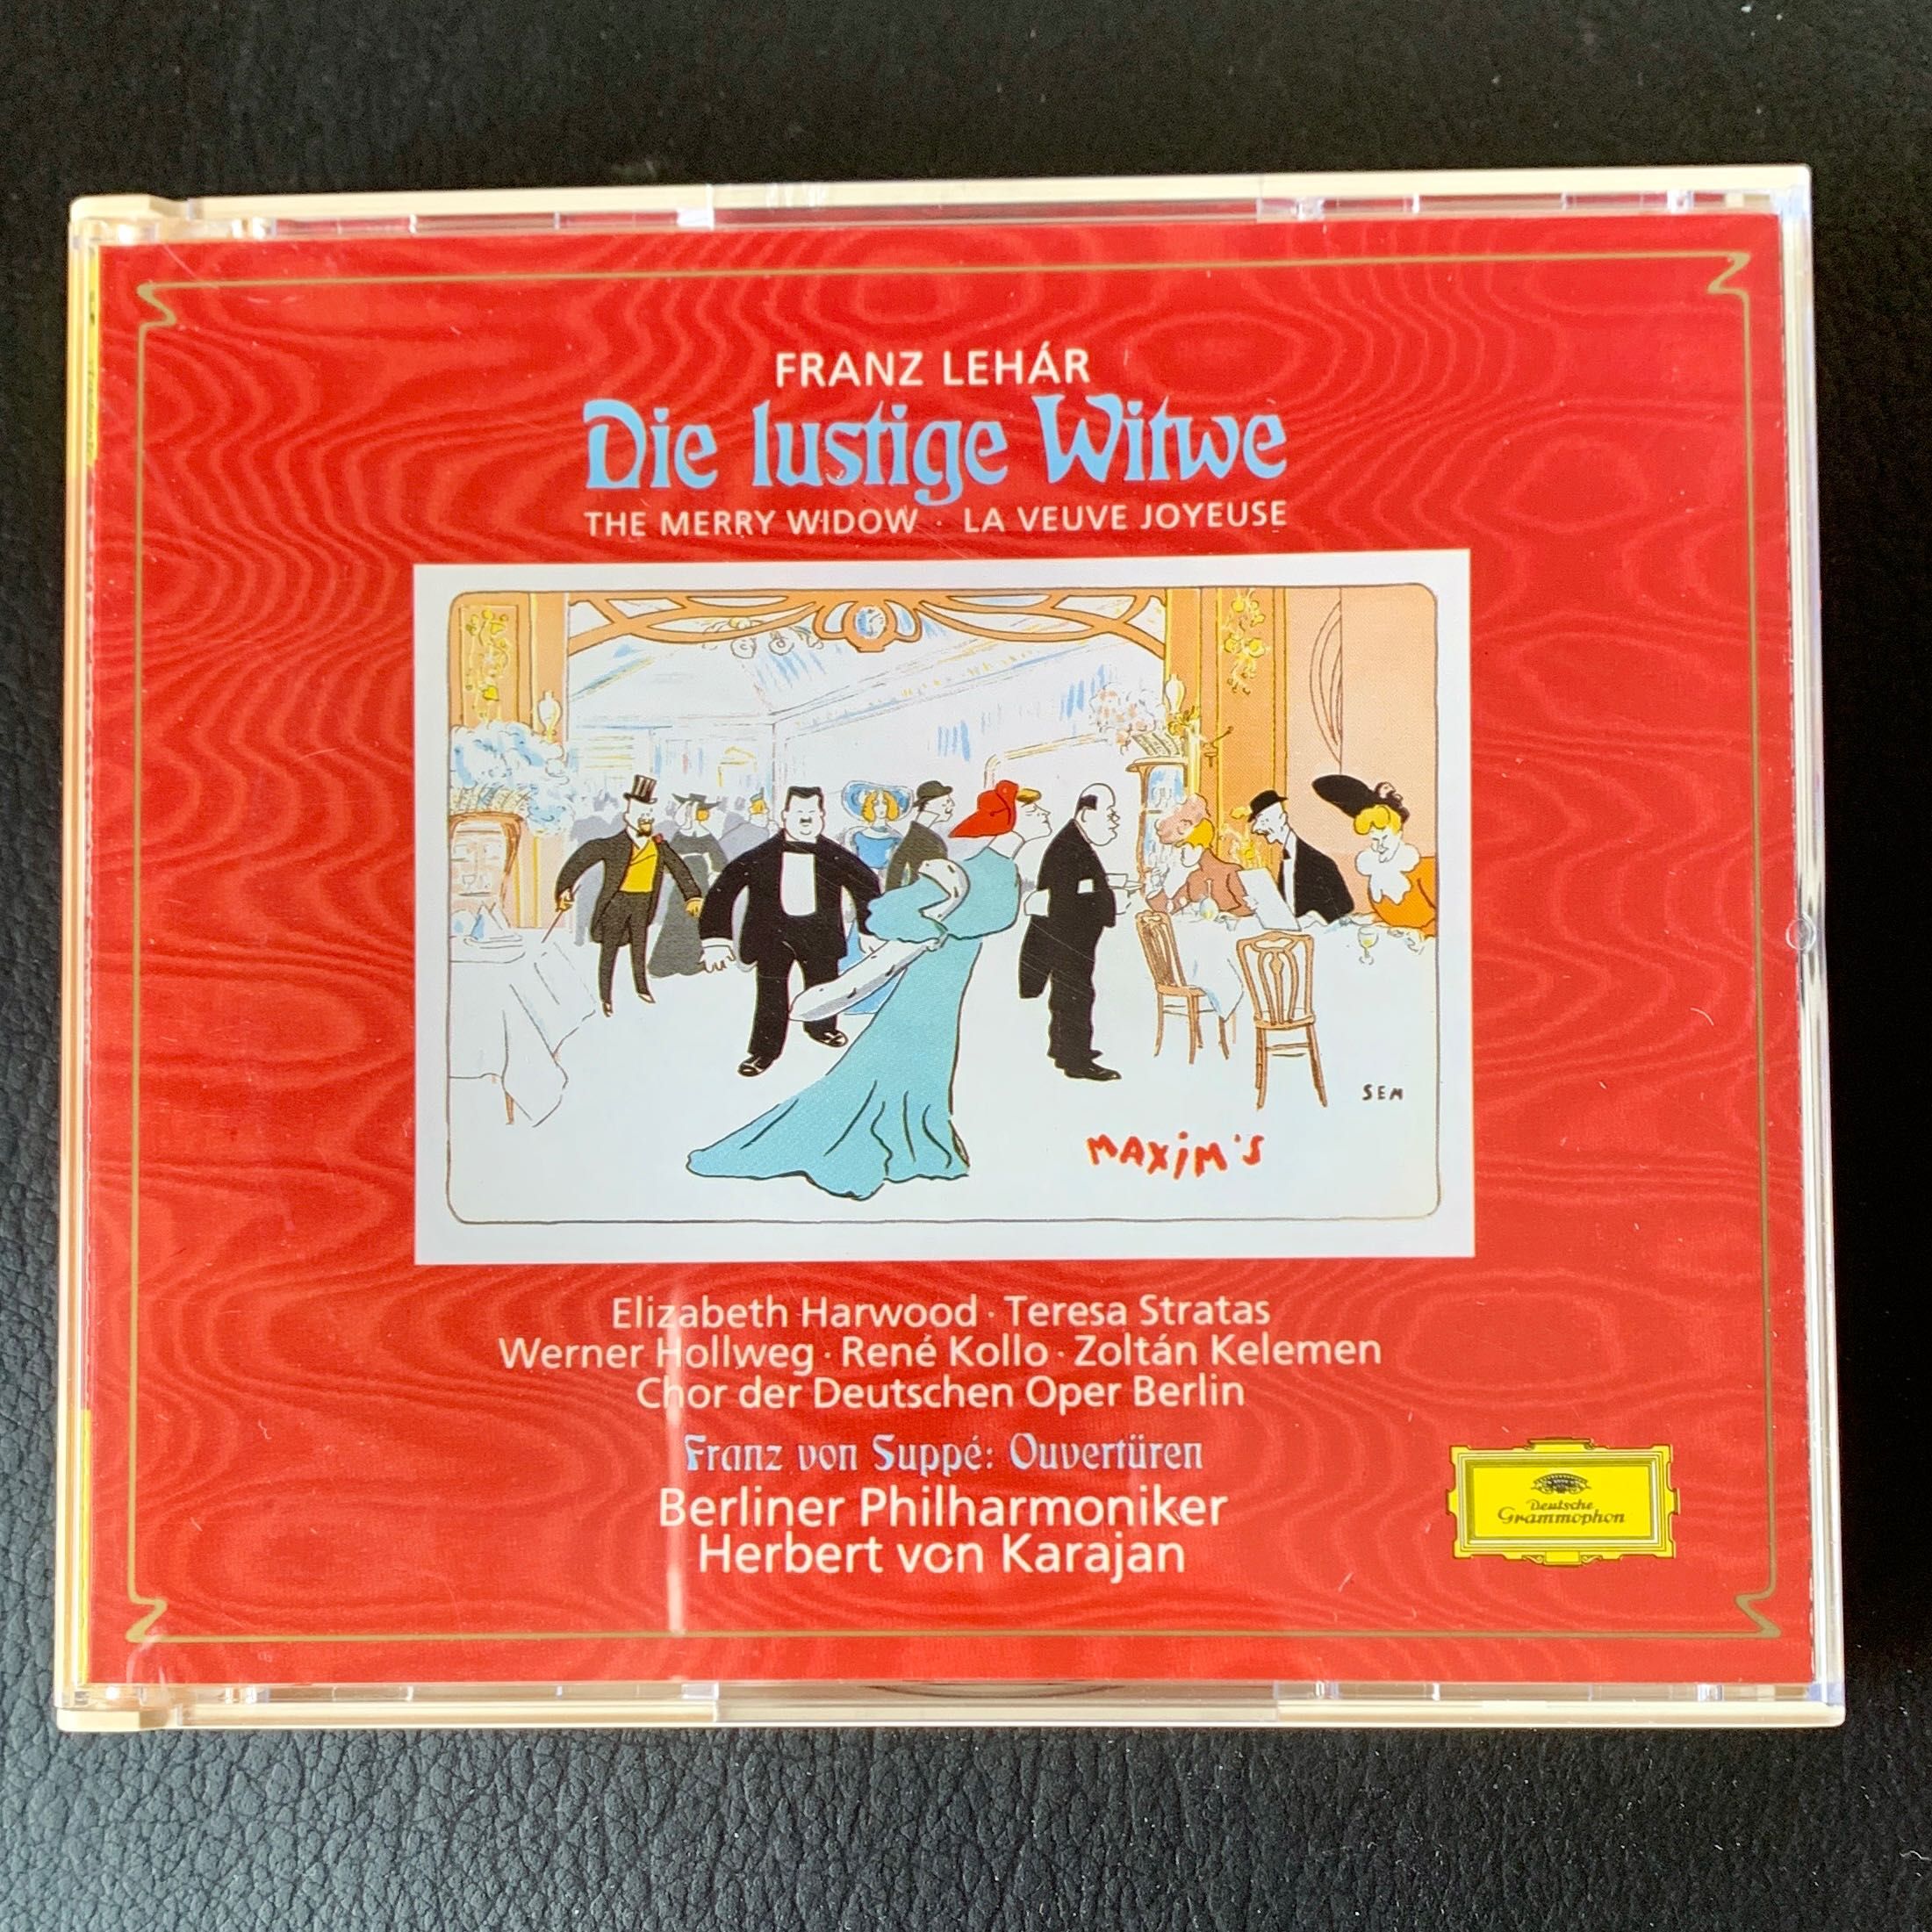 A Viúva Alegre (integral), Franz Lehar, Karajan, Stratas: CDs ópera